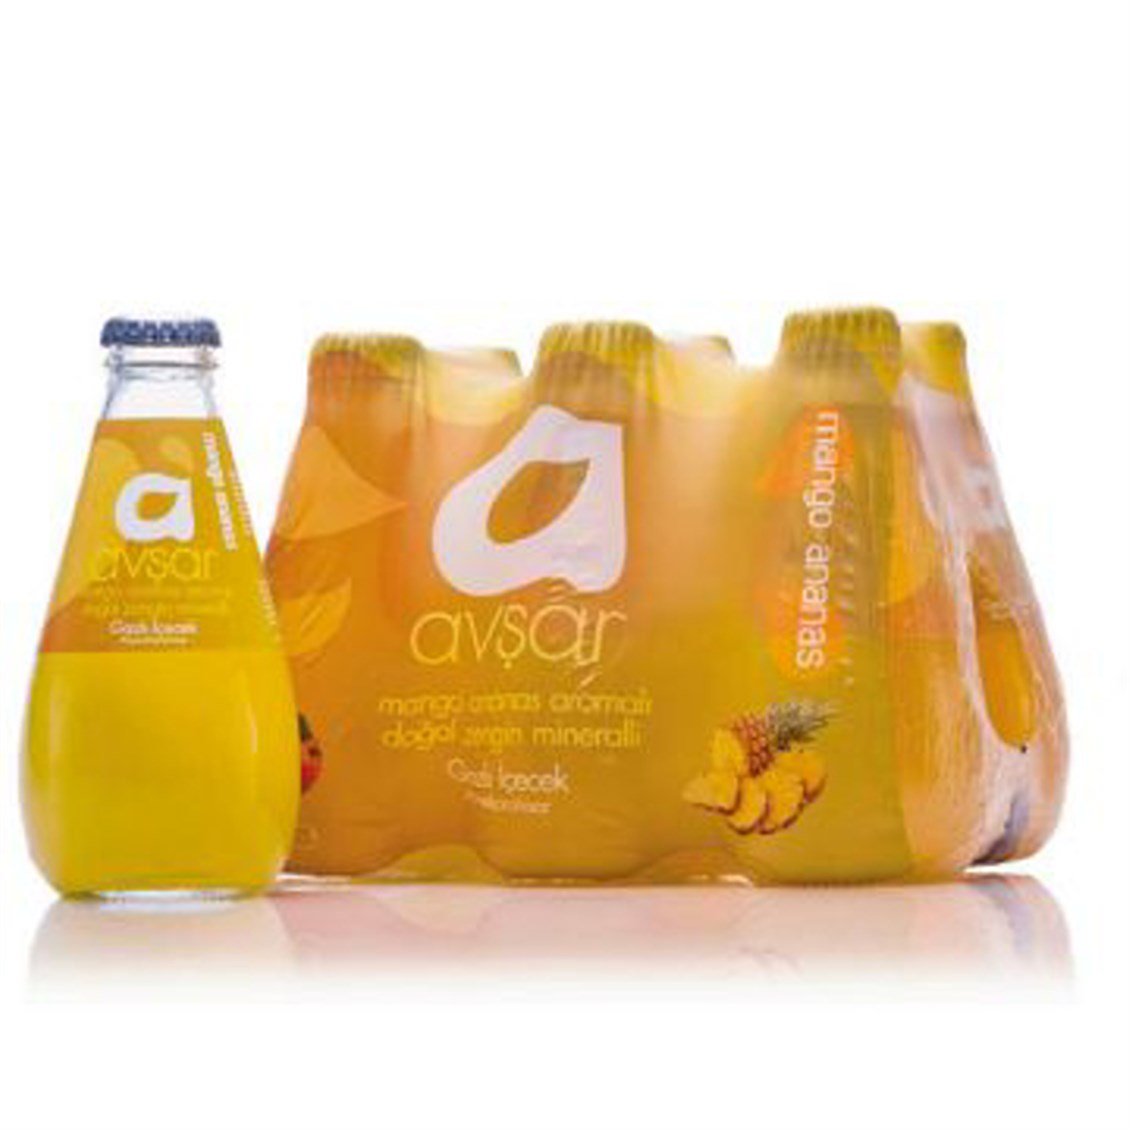 Avşar C+ Plus Mango & Ananas Aromalı Maden Suyu 6lı 200 ml - Onur Market